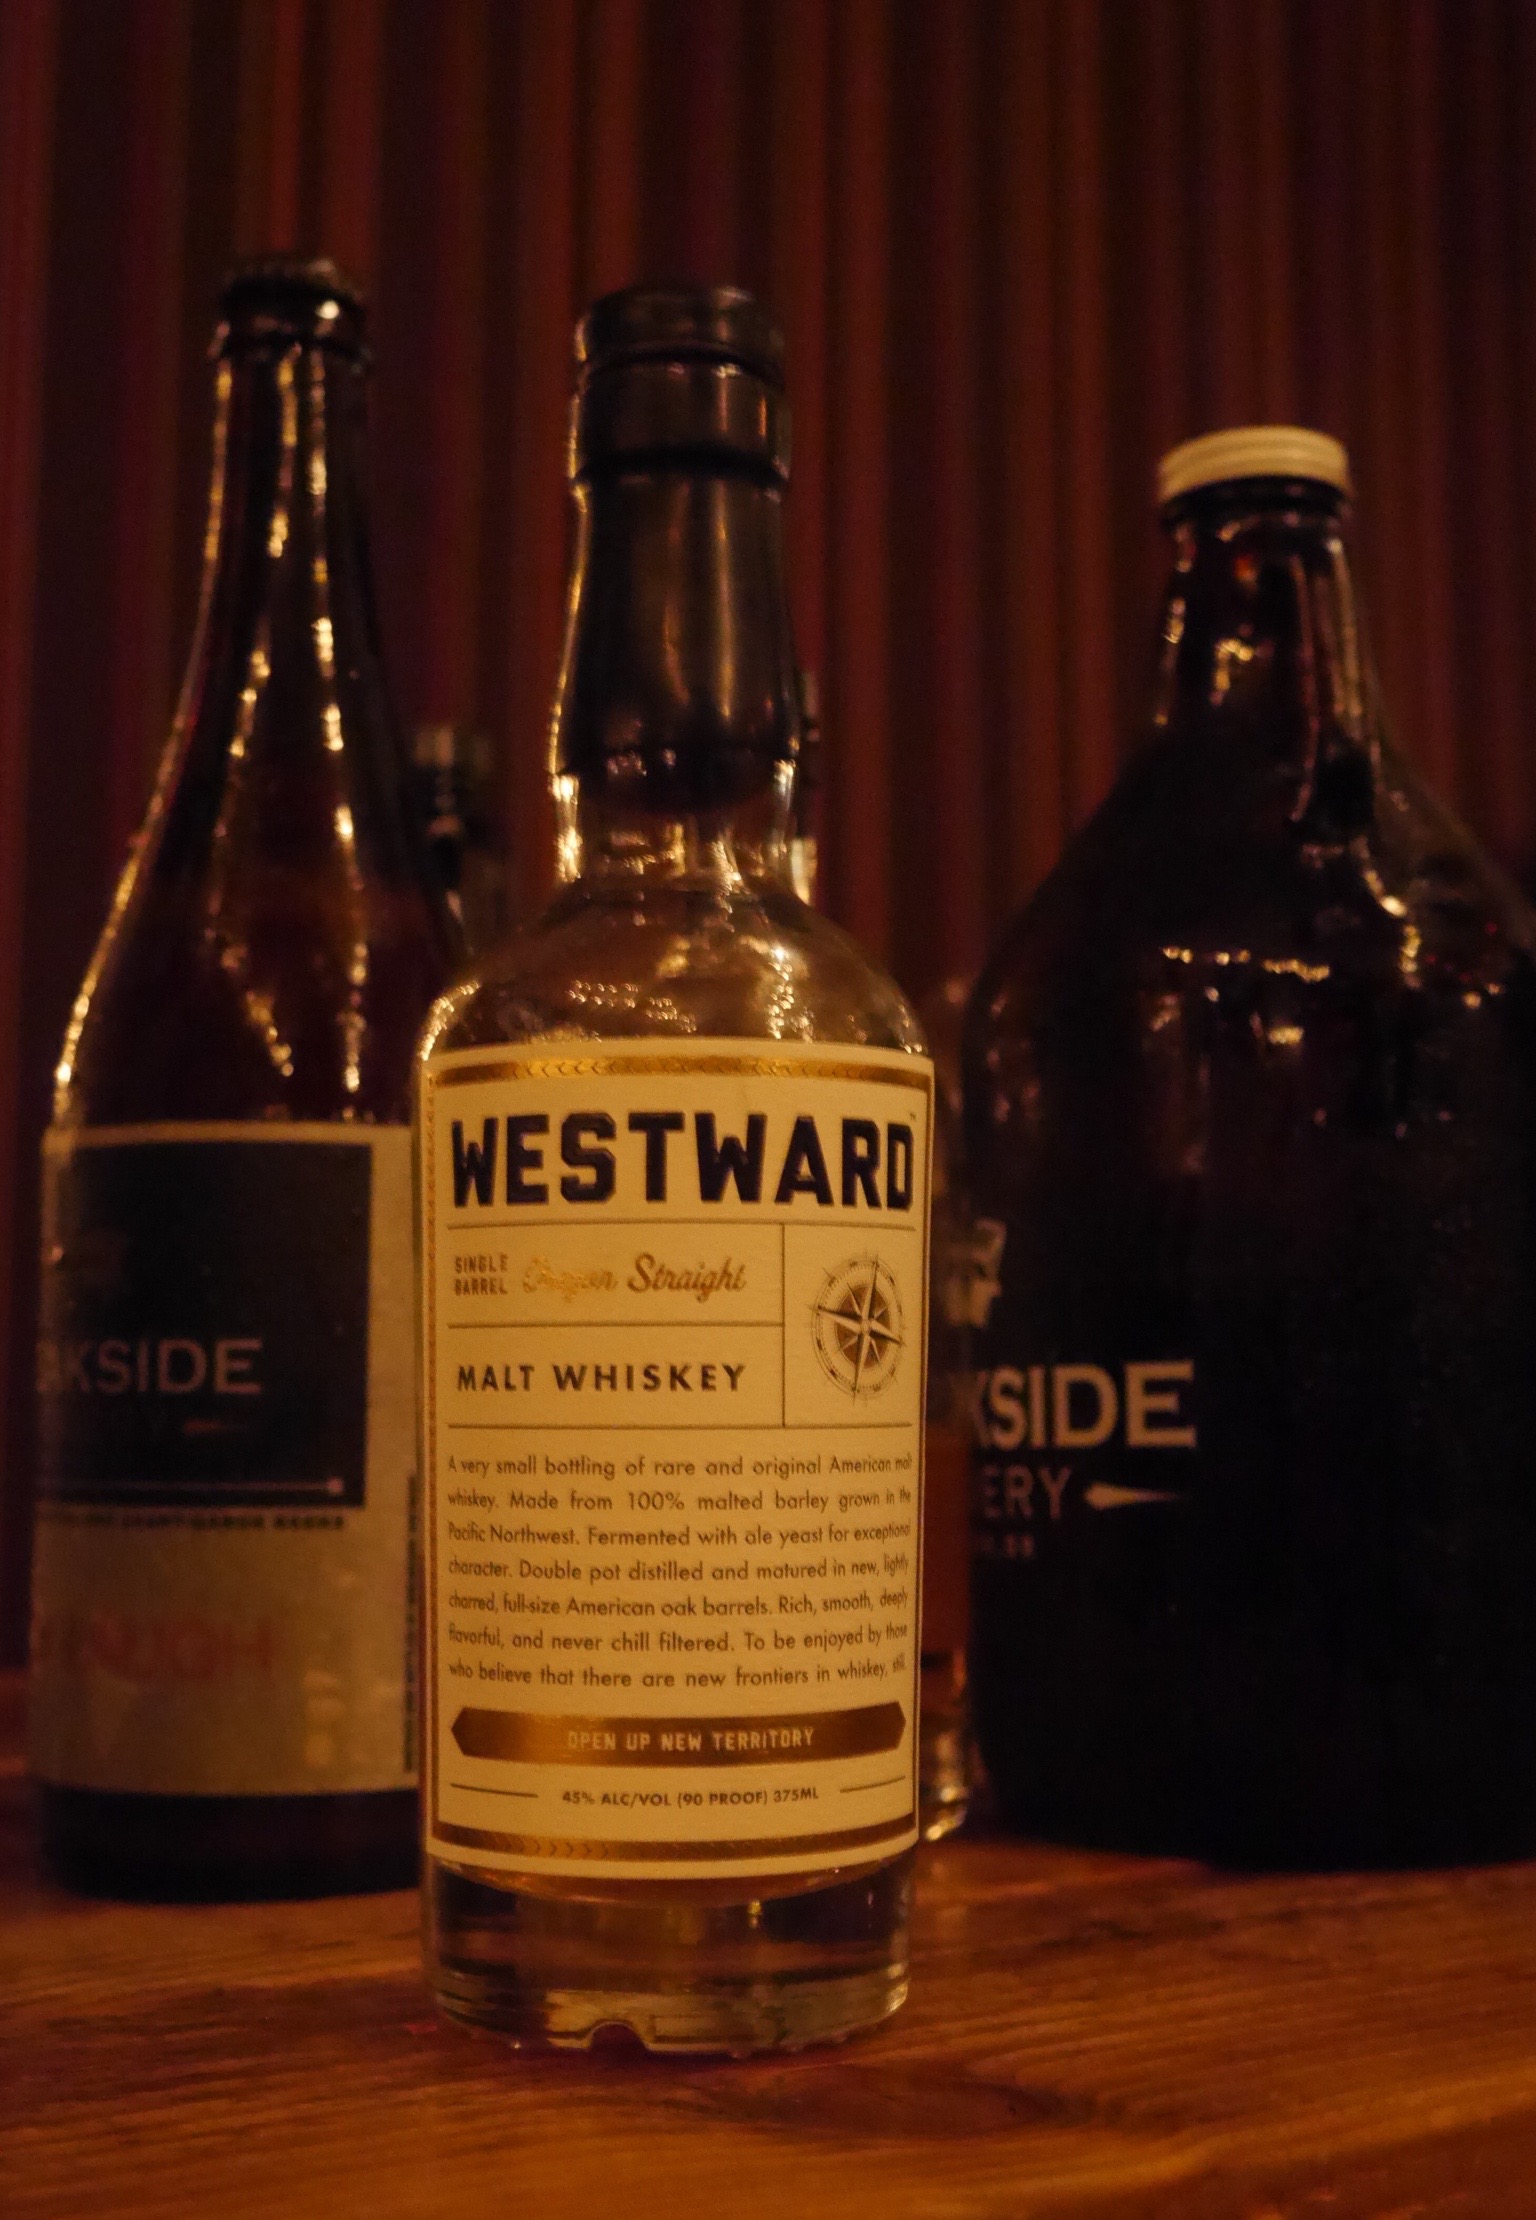 House Westward Single Malt Whiskey pouring at Brewstillery Festival. (photo by Cat Stelzer)